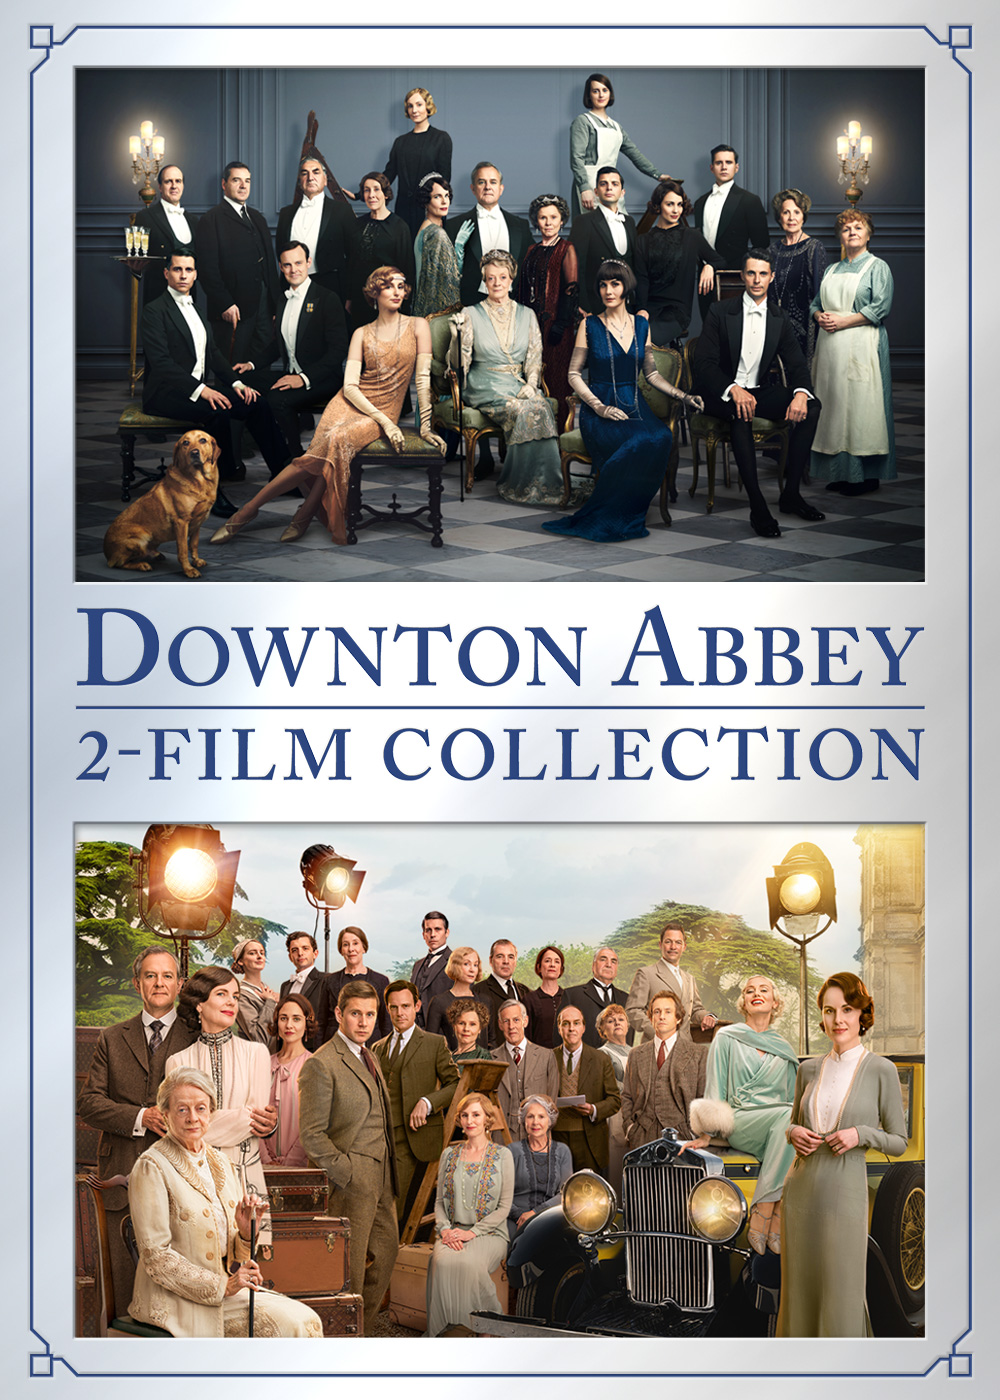 Downton Abbey 2-Film Collection - Digital Code - UHD